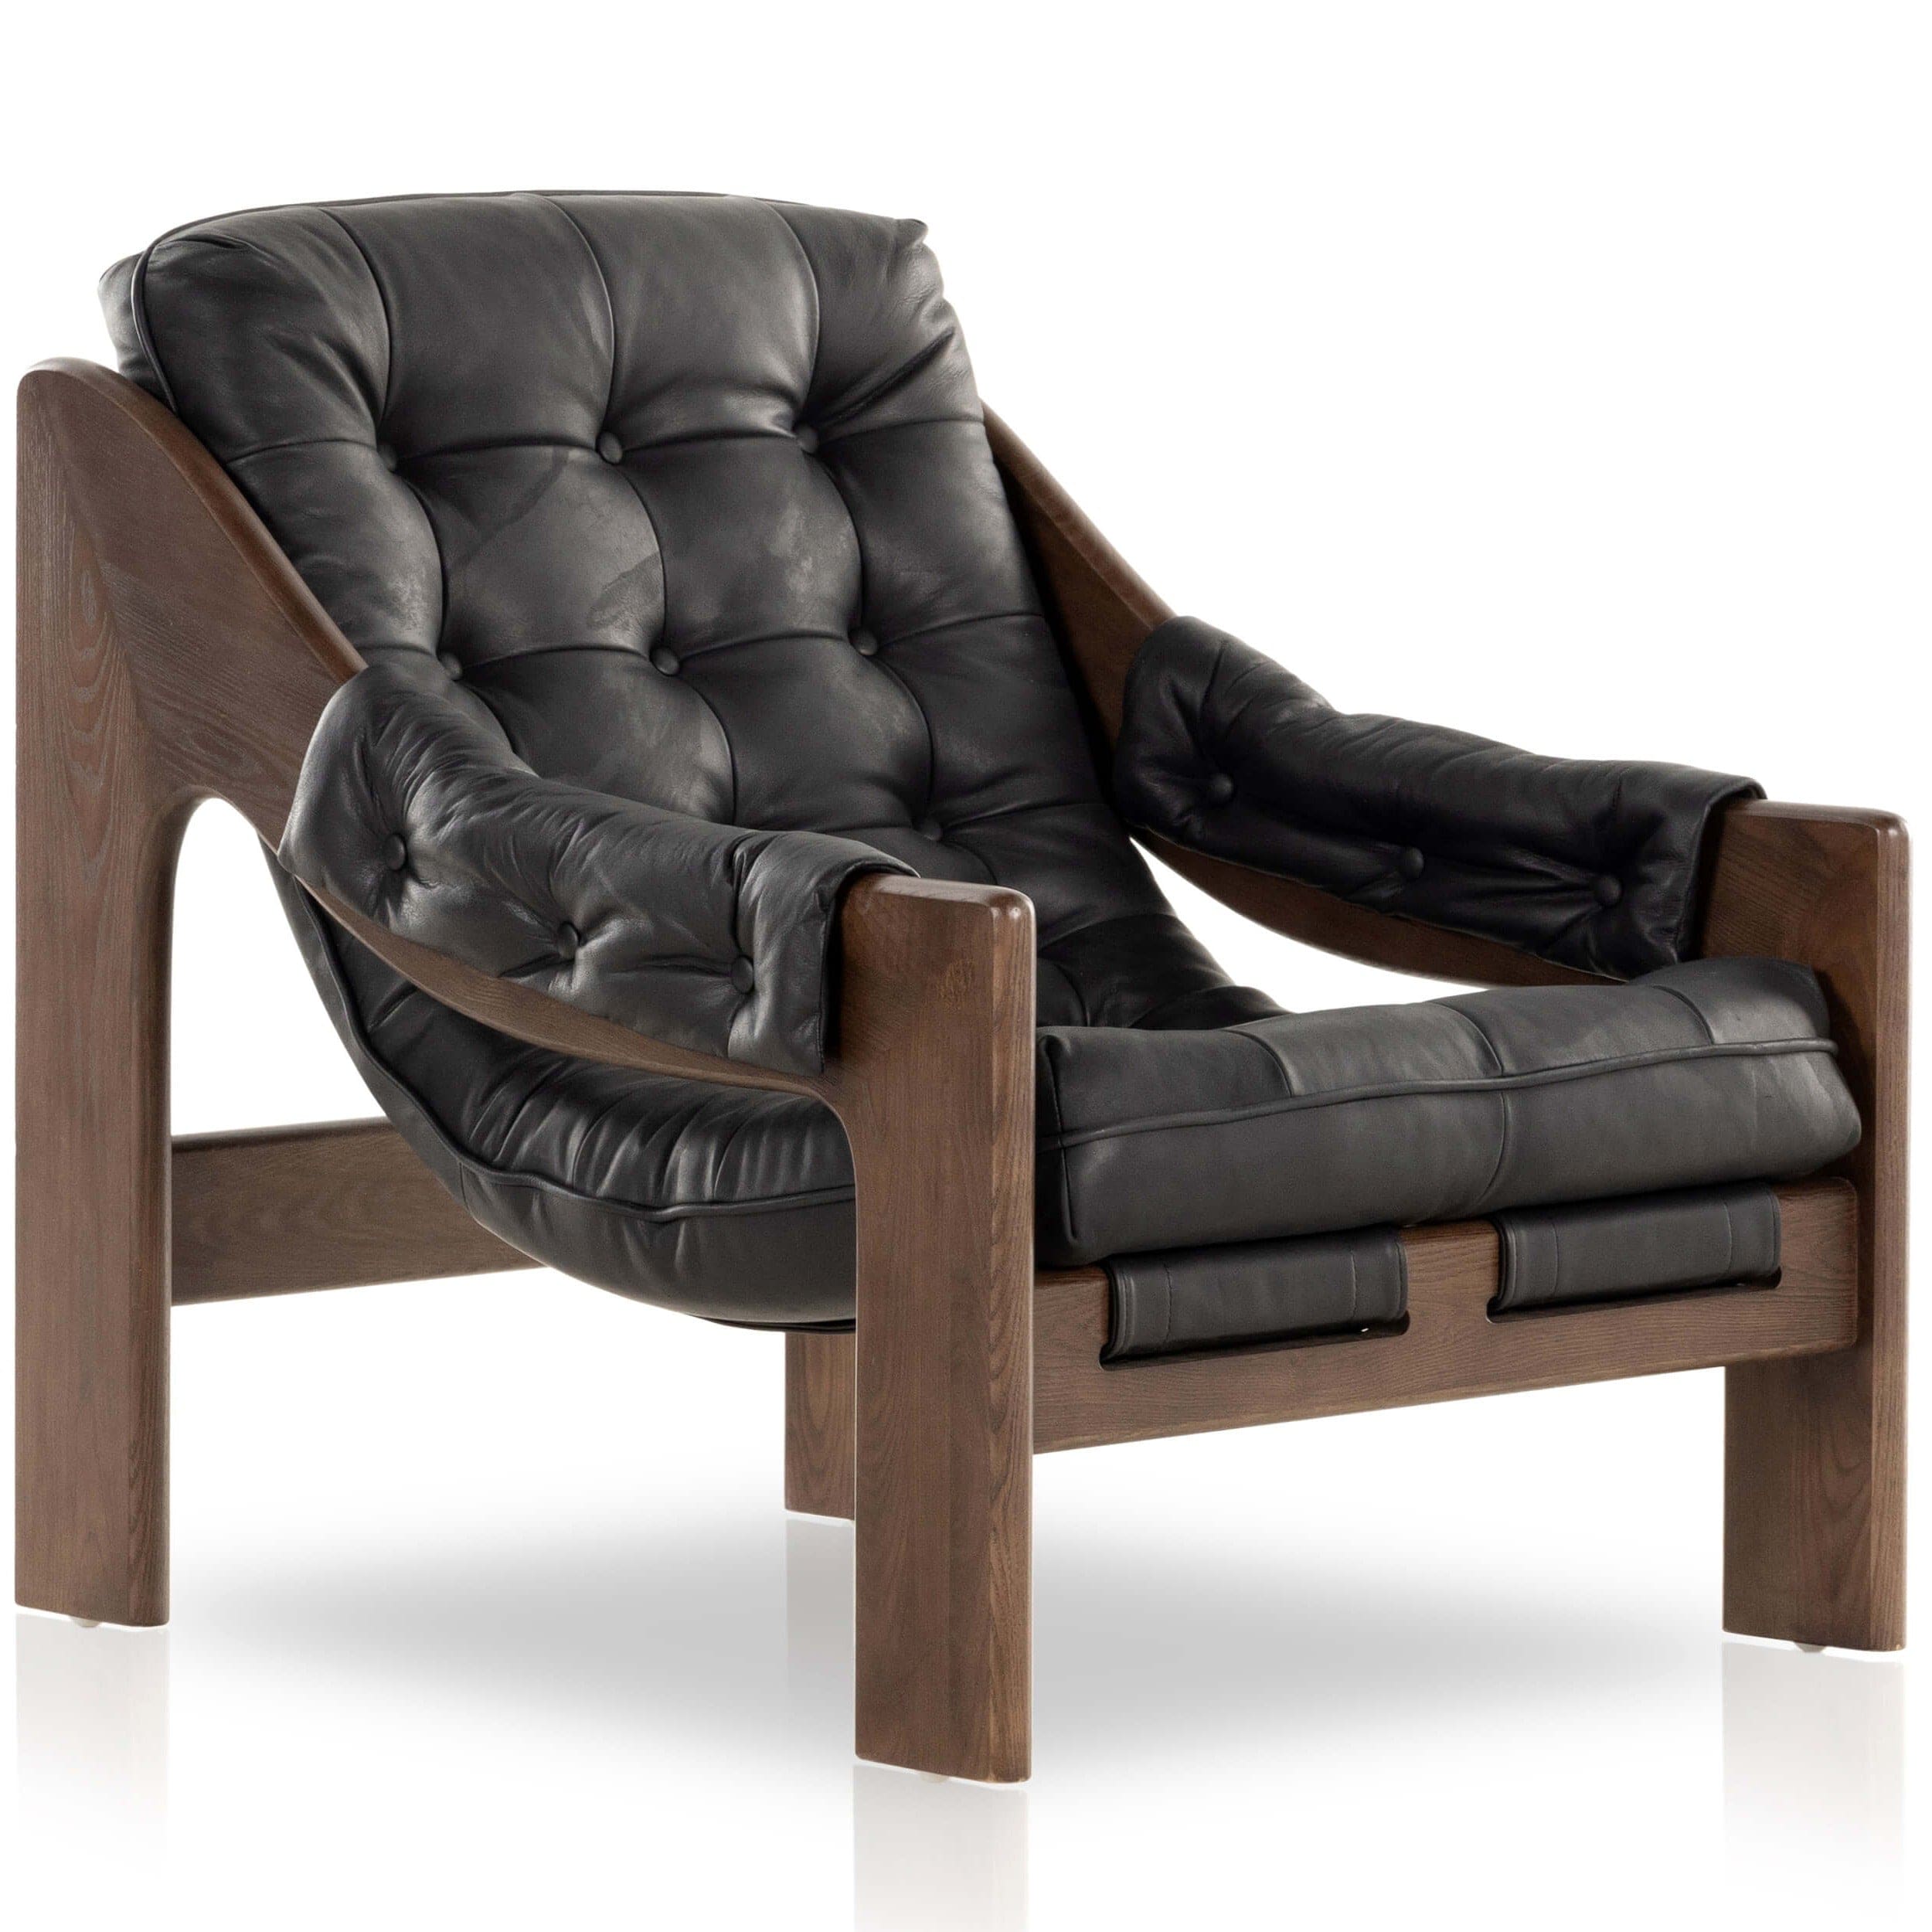 Image of Halston Leather Chair, Heirloom Black